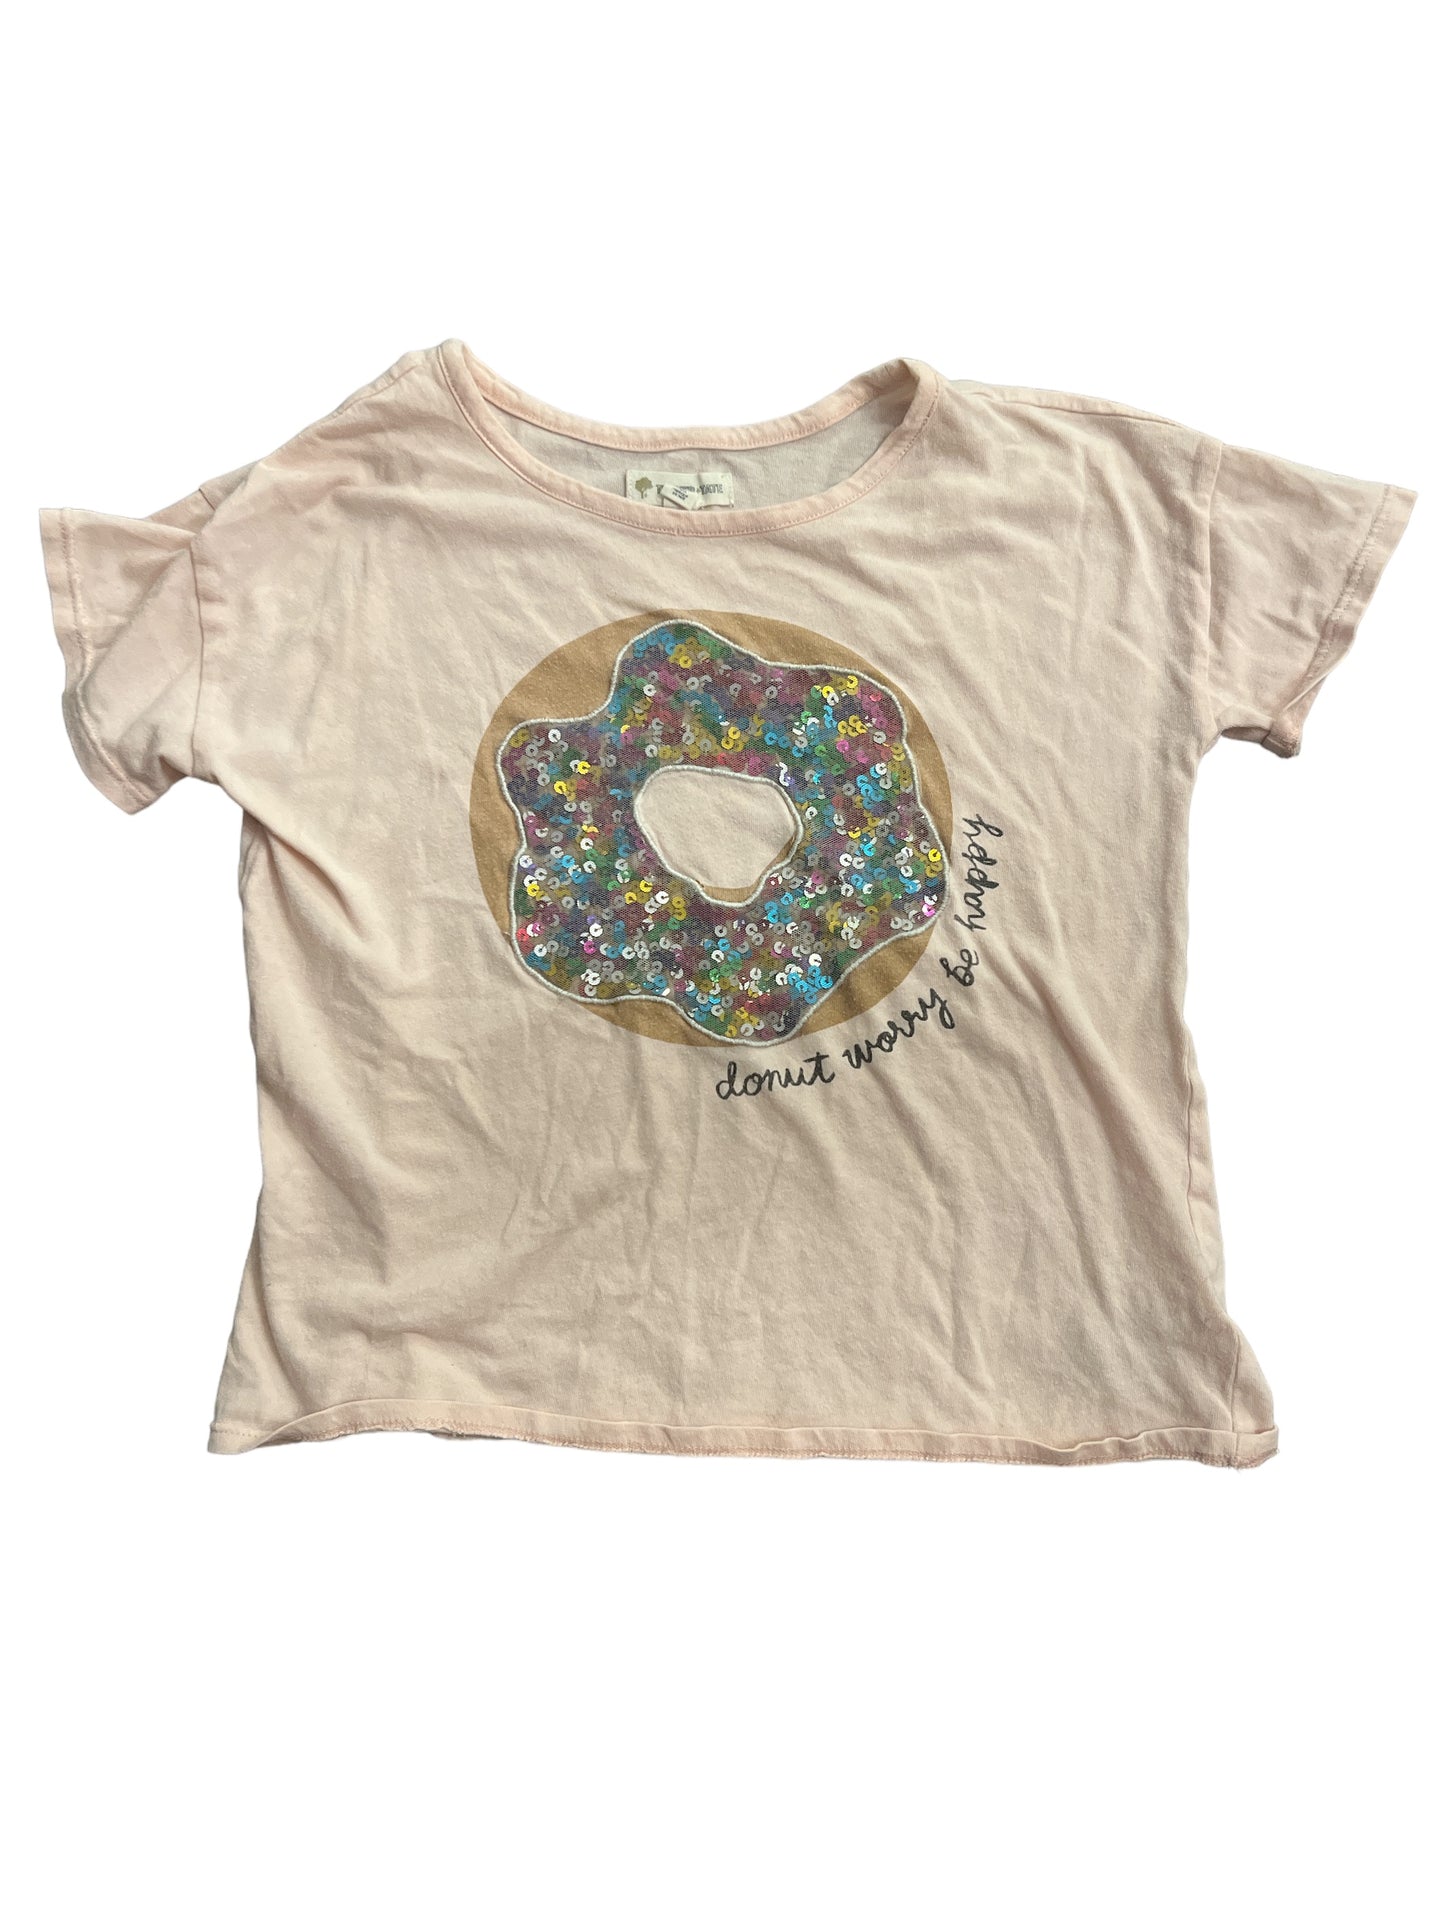 Donut Pink Shirt